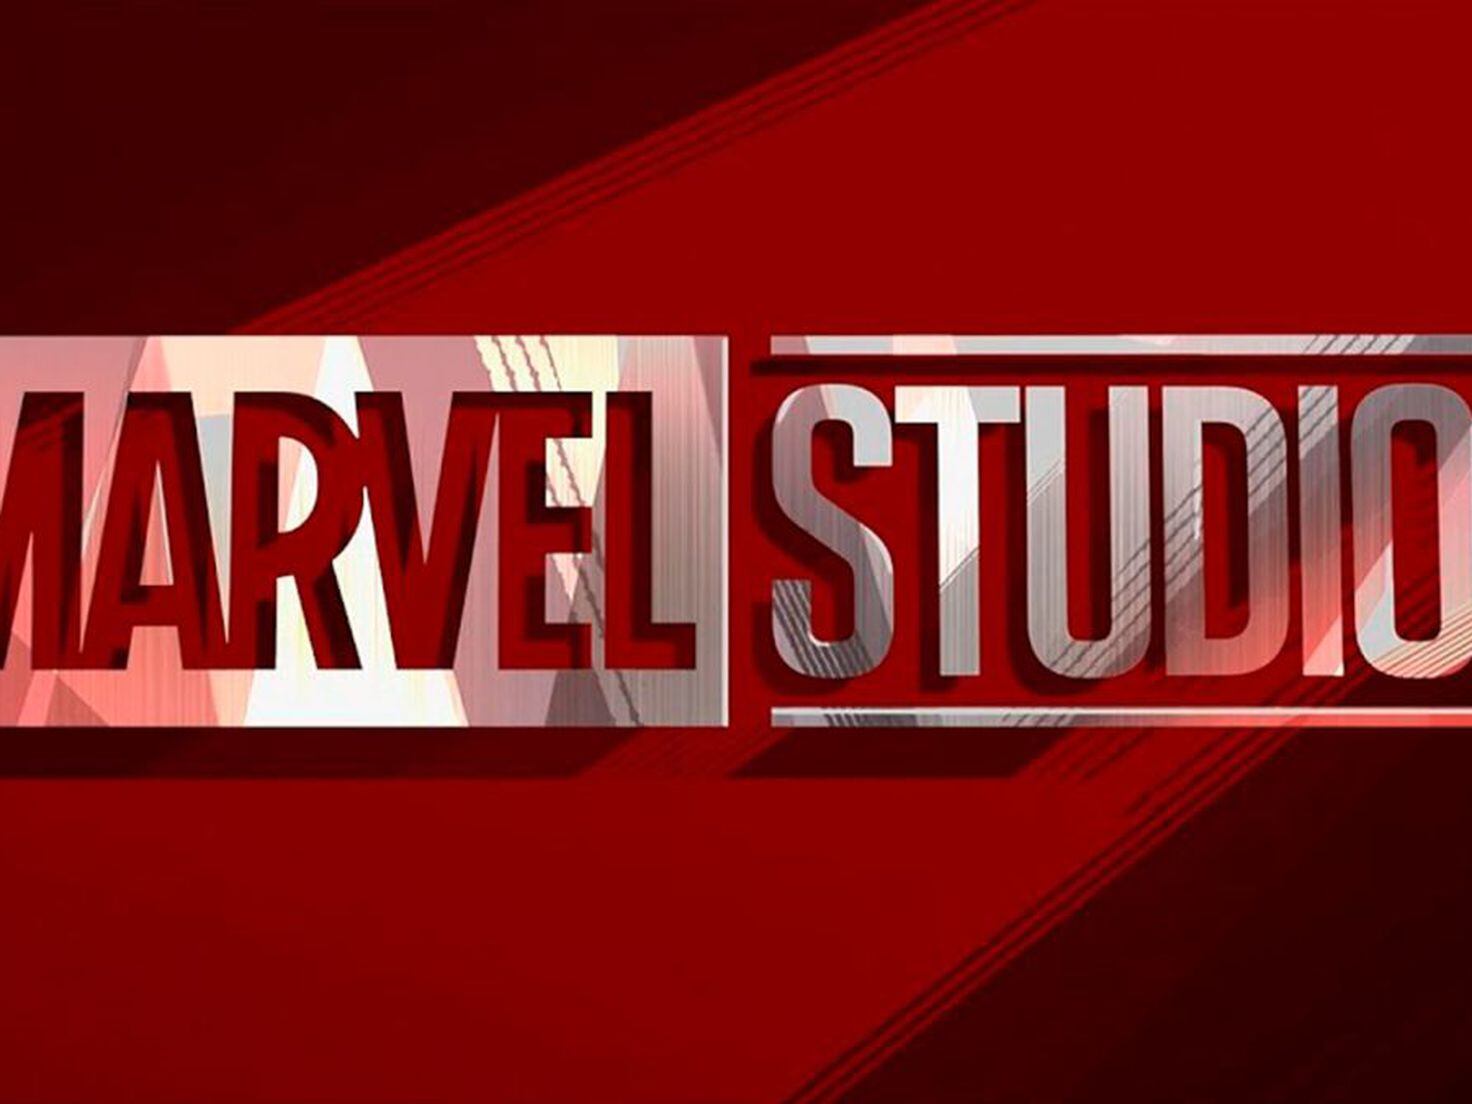 Marvel Release Date Changes: 'Deadpool' & 'Captain America